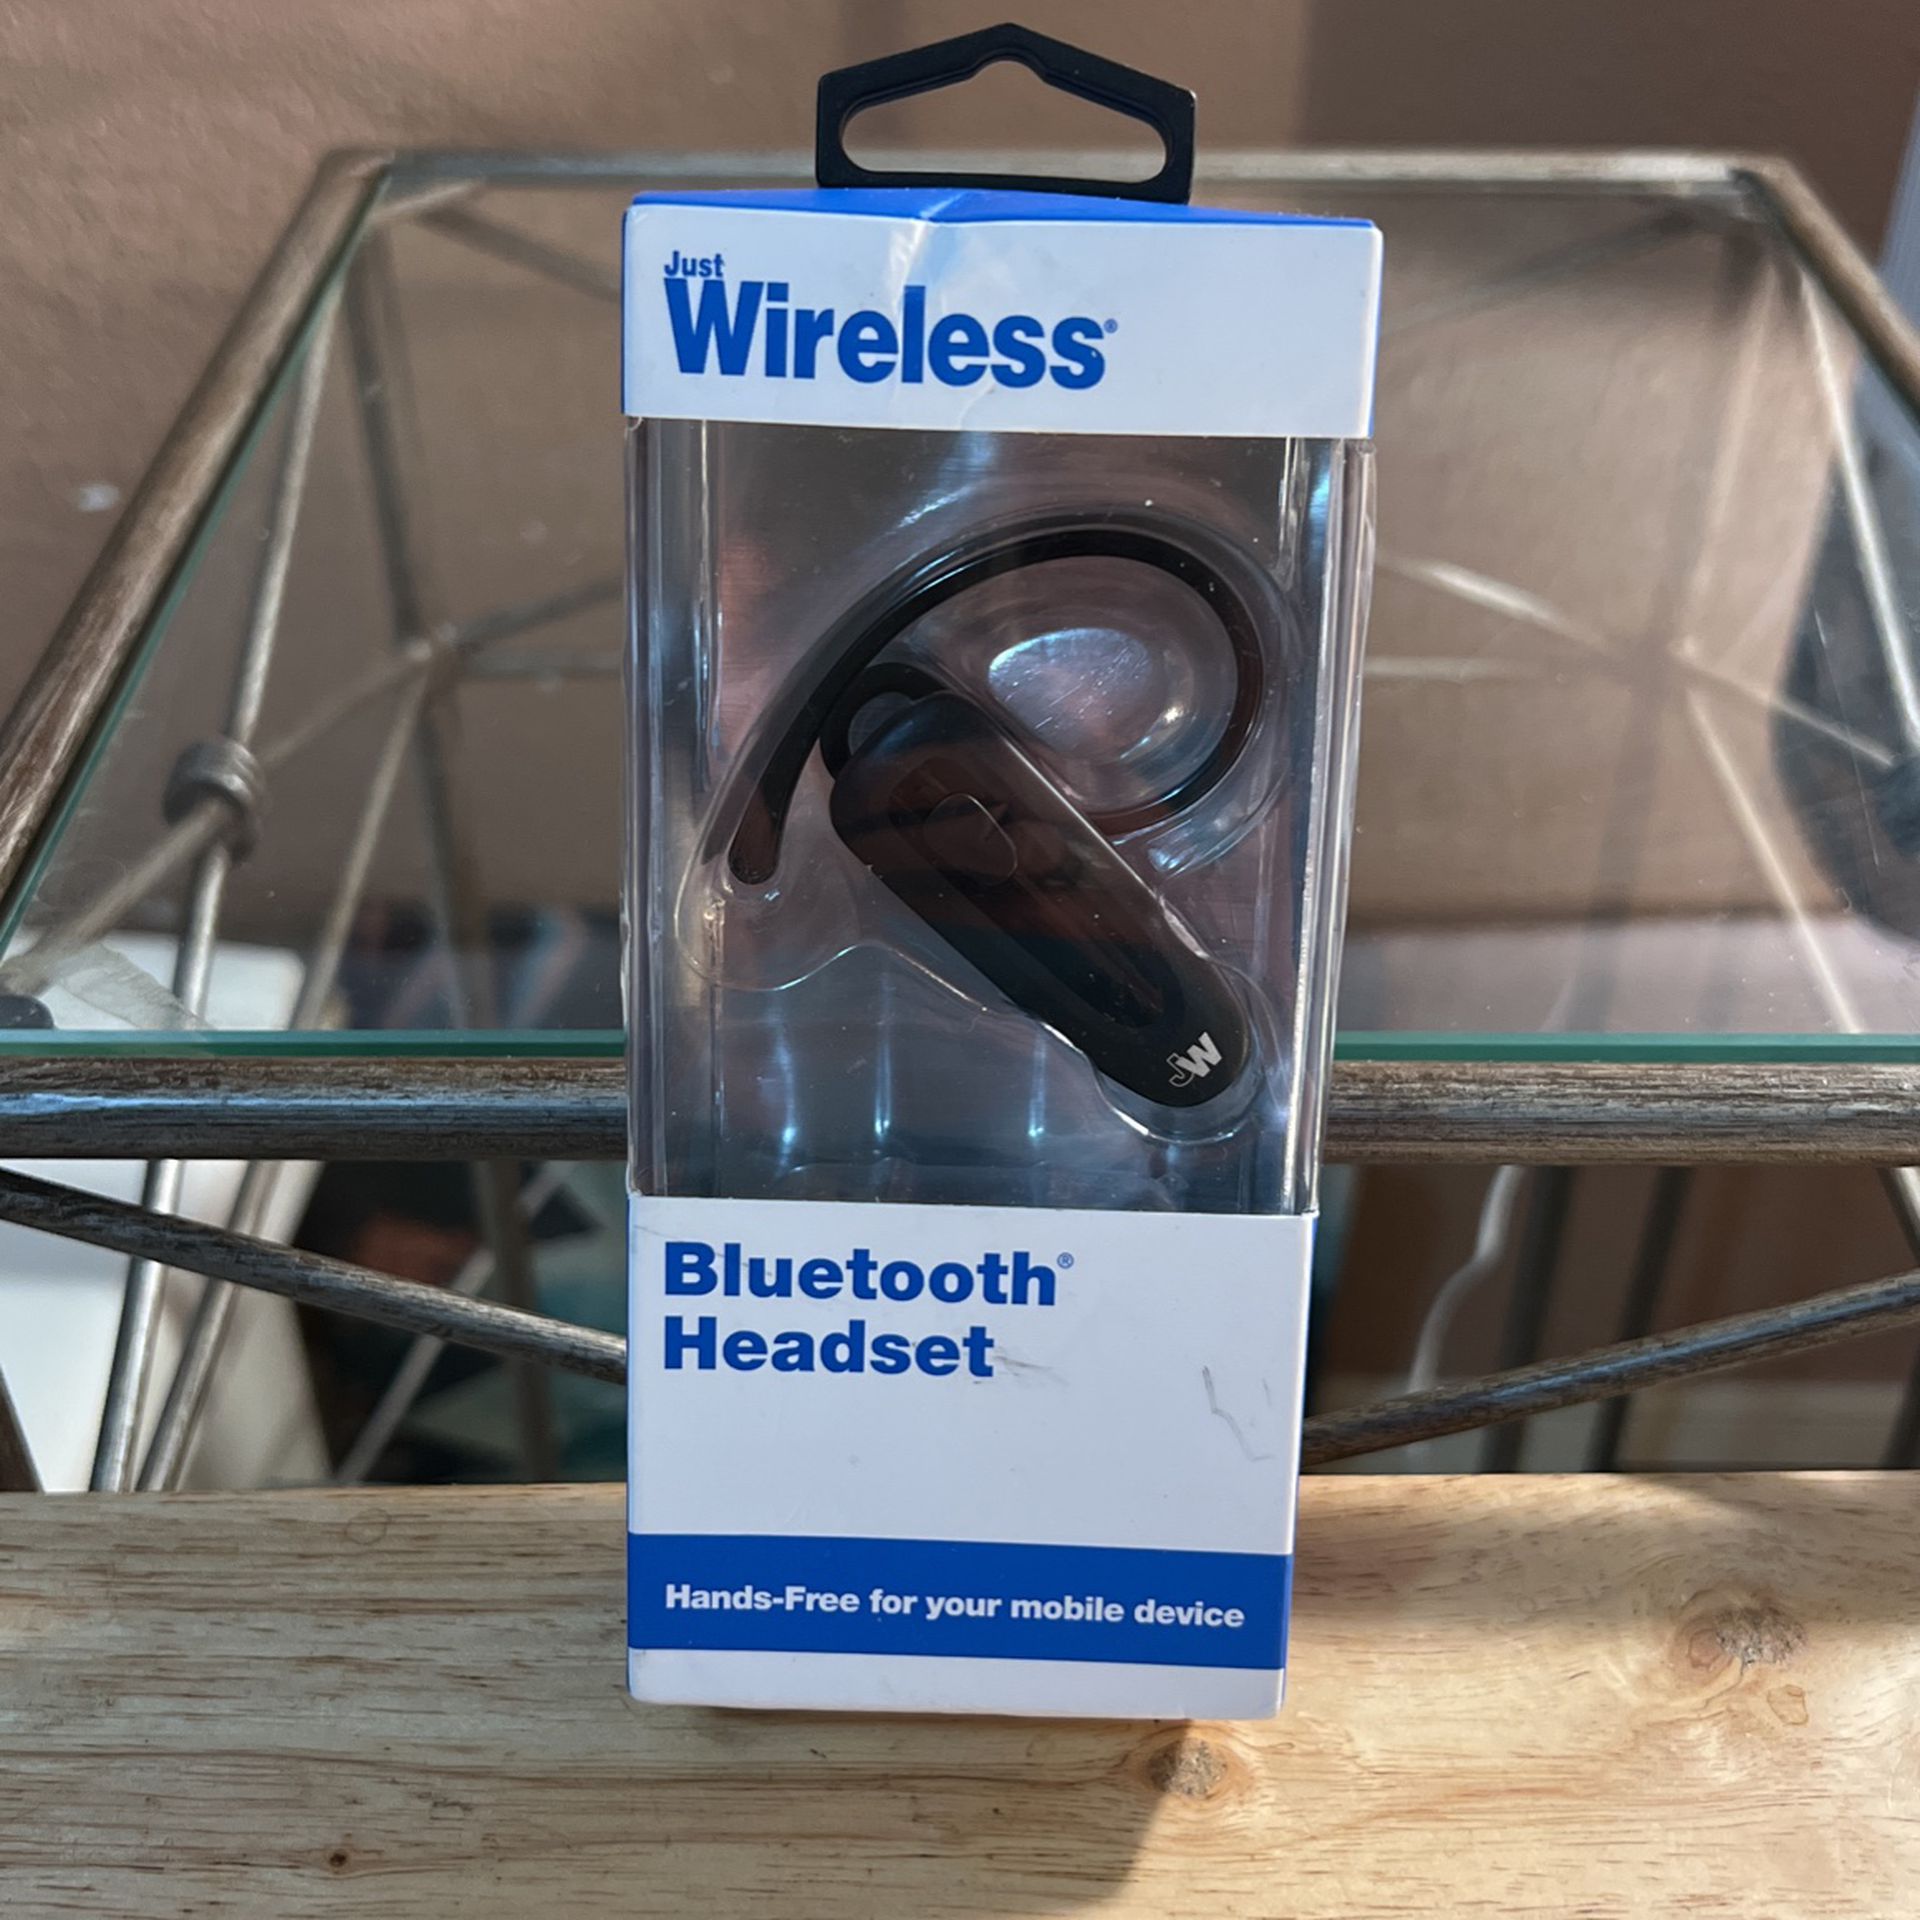 Wireless Bluetooth Headset Hands Free $8